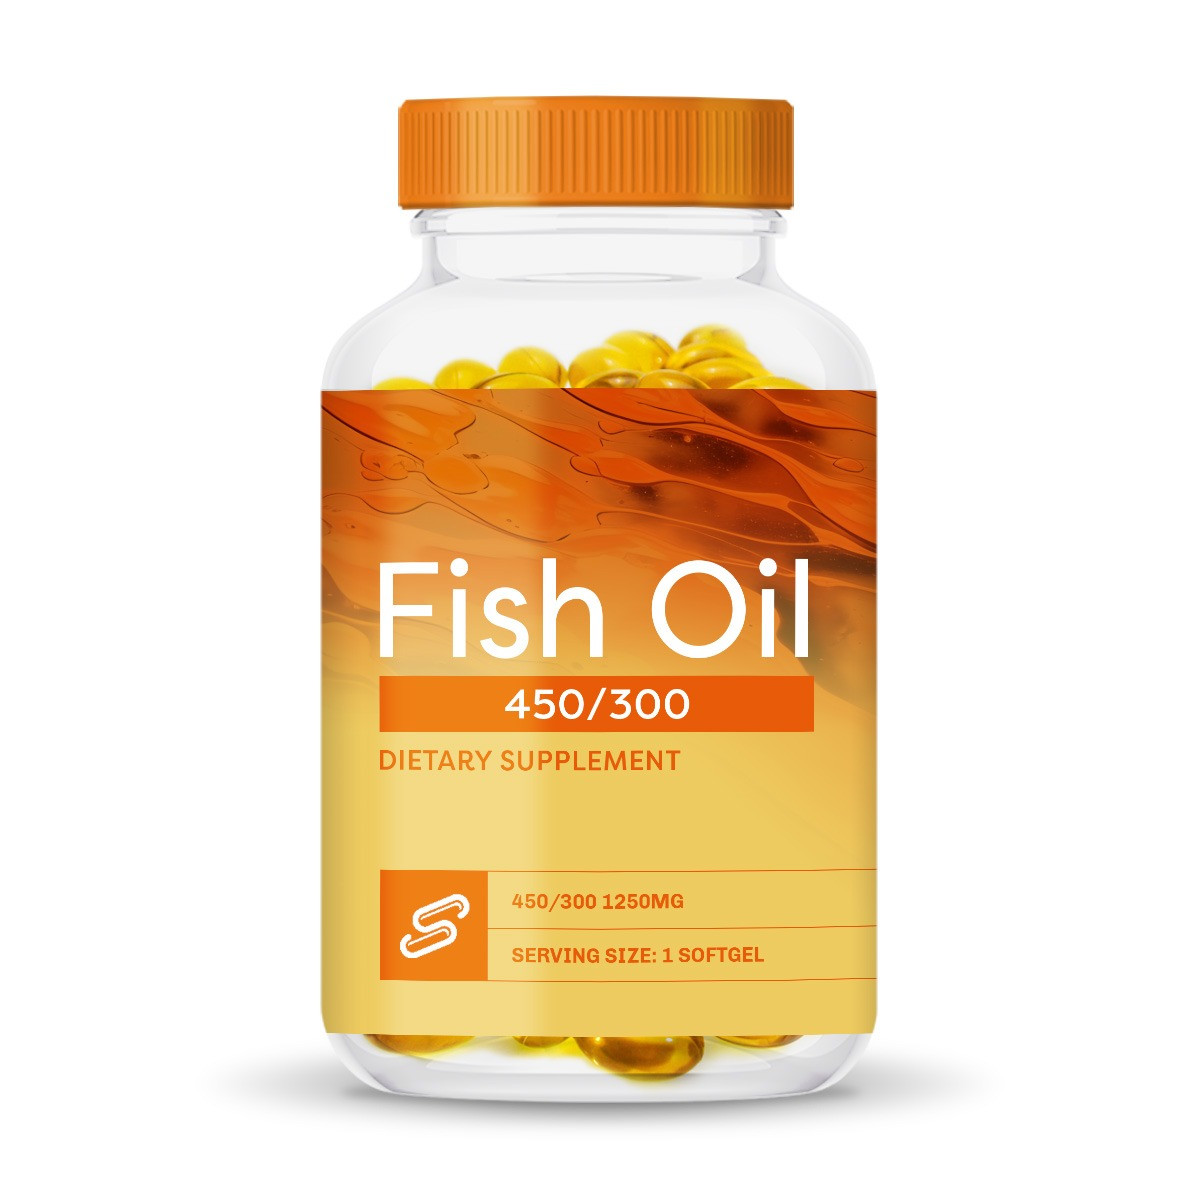 Fish Oil 450/300